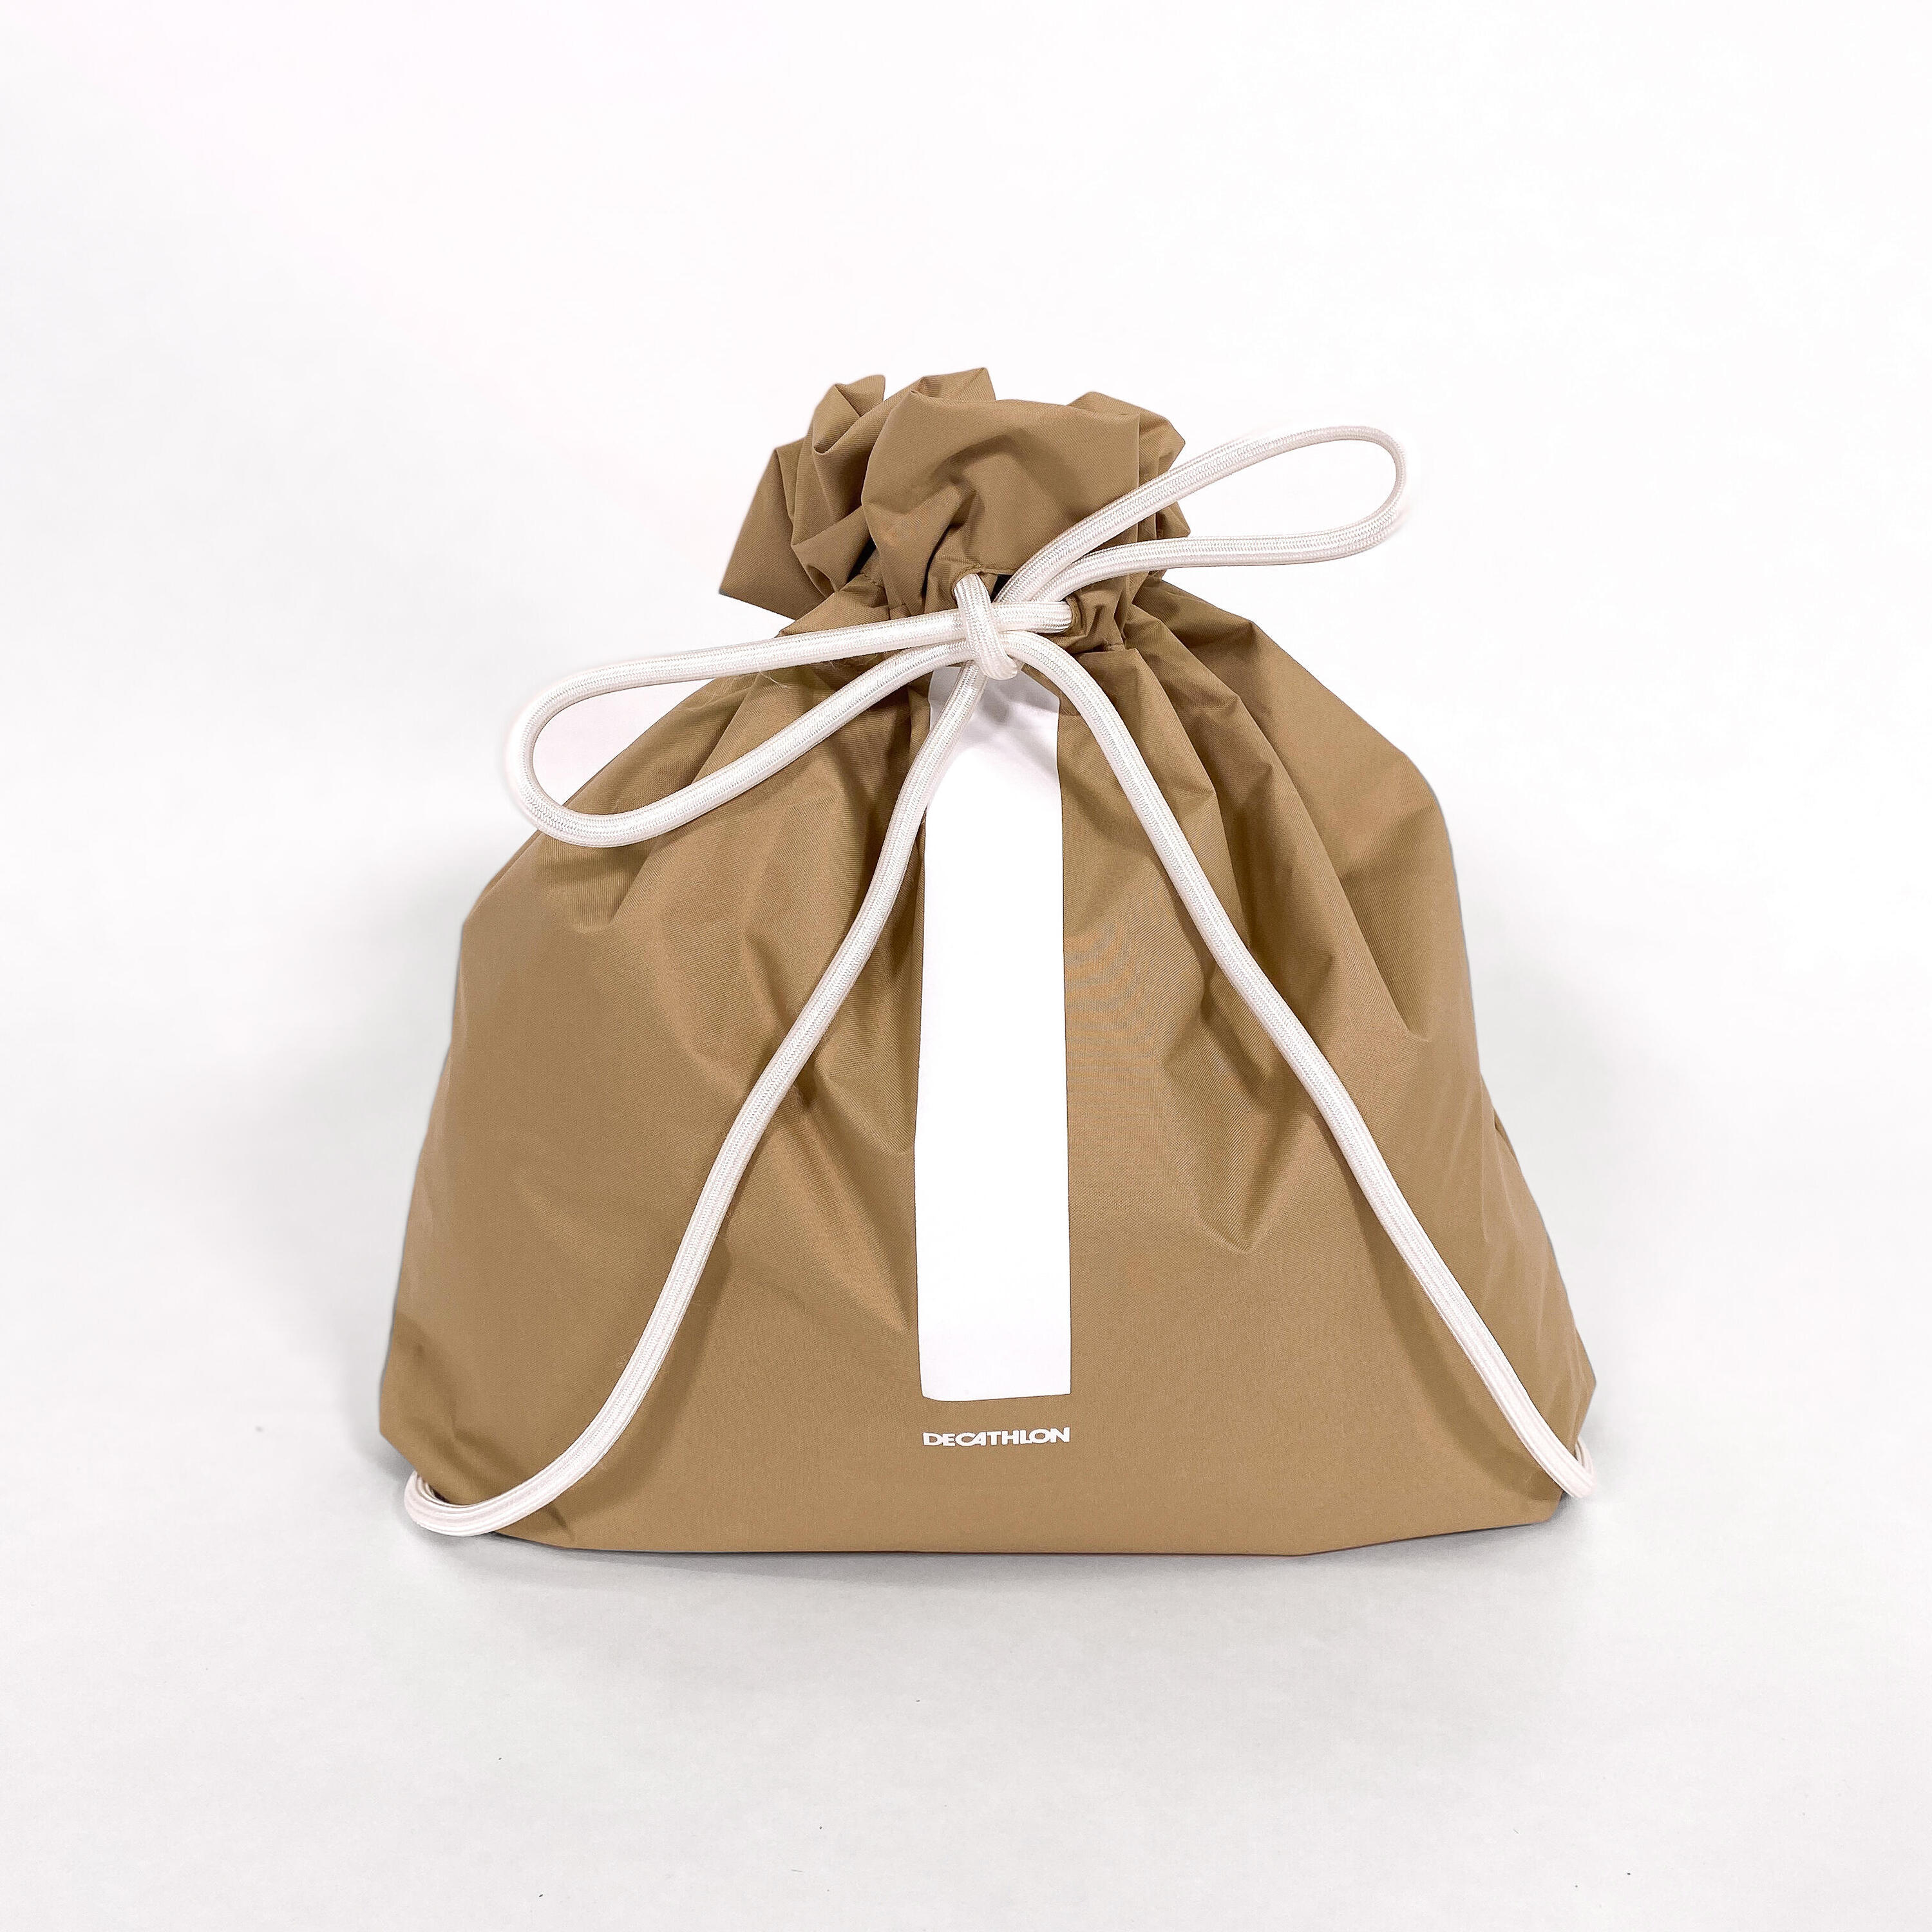 DECATHLON Gift Bag
Reusable - Large Size